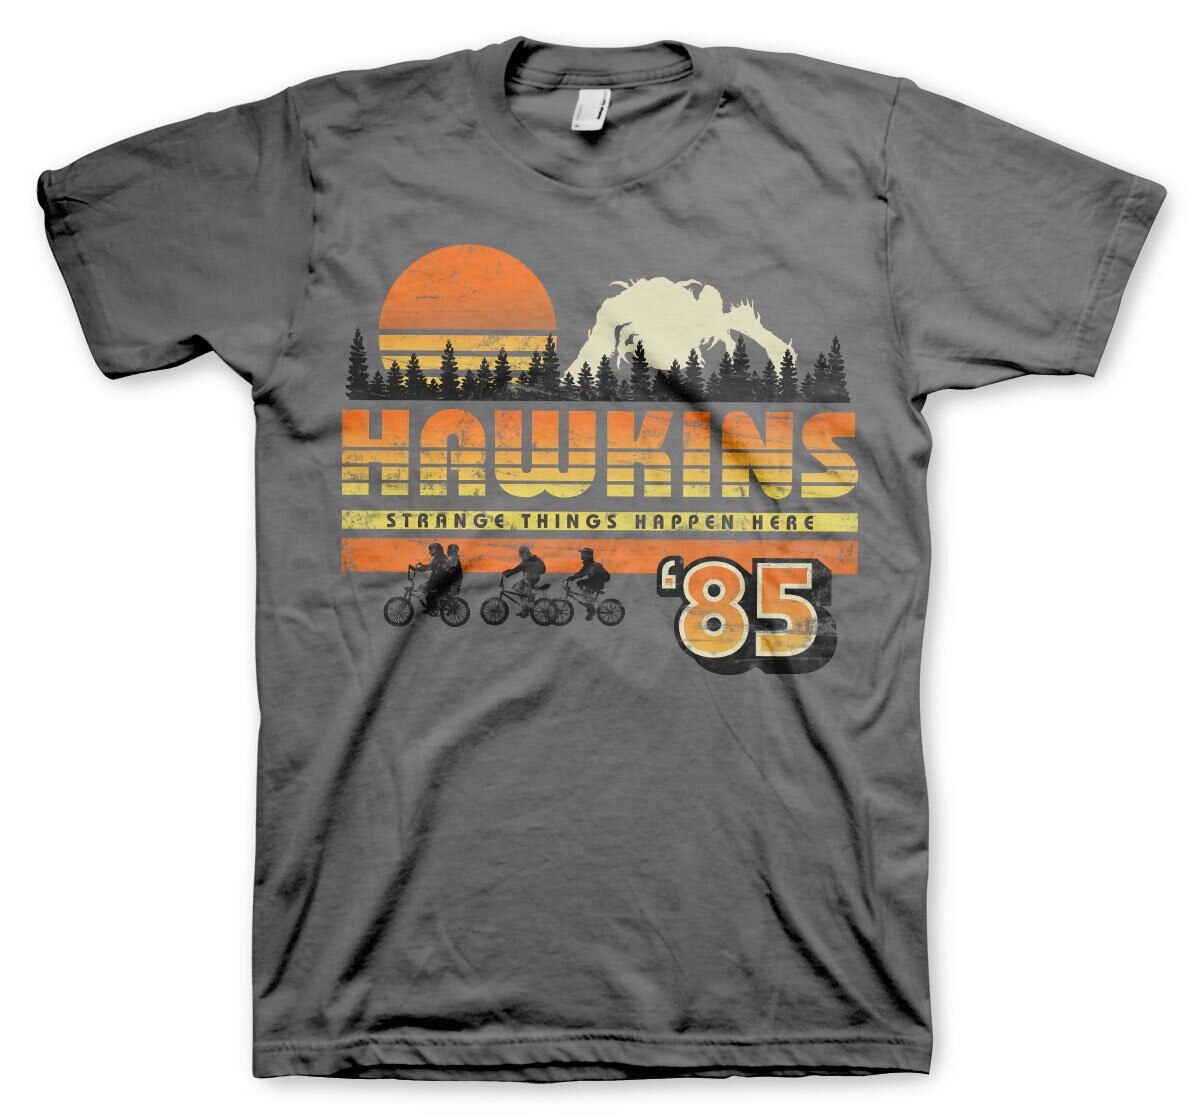 Hawkins '85 Vintage T-Shirt